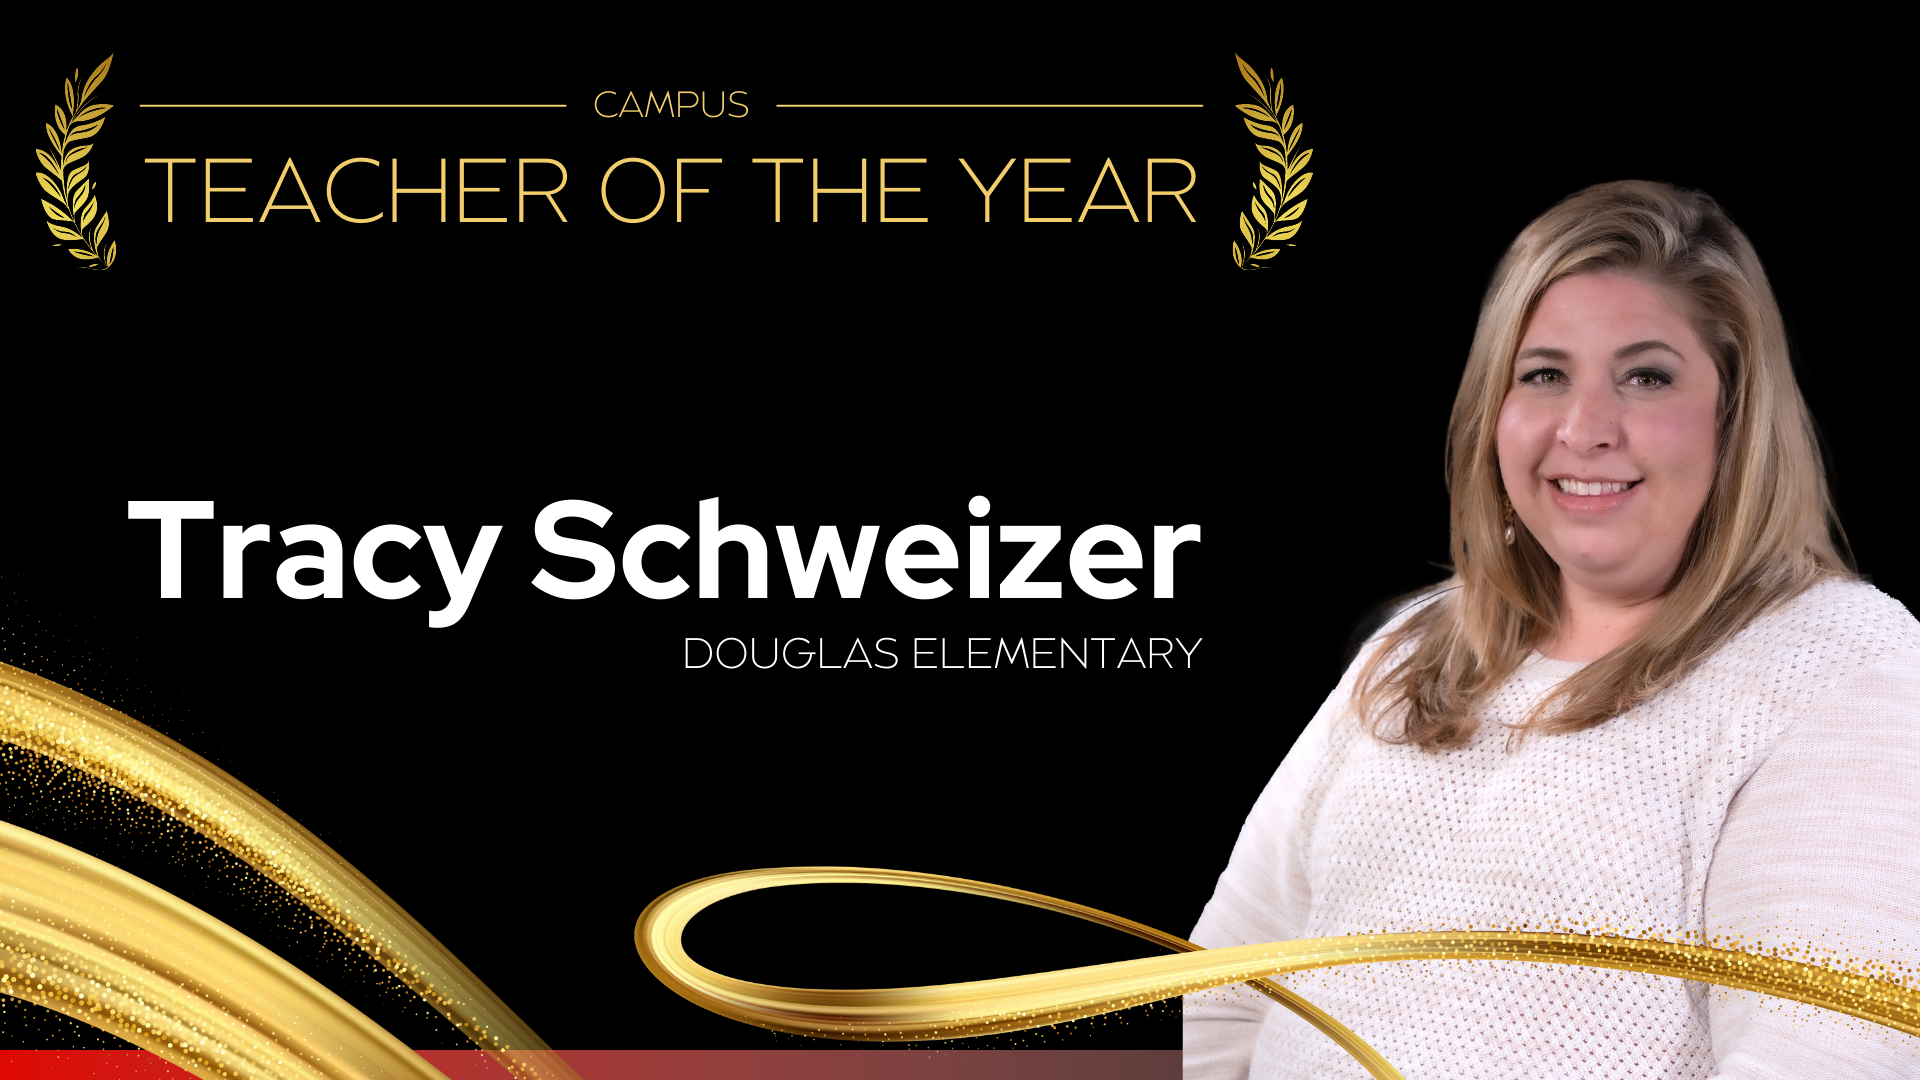 Campus Teacher of the Year Douglas Elementary School - Tracy Schweizer 